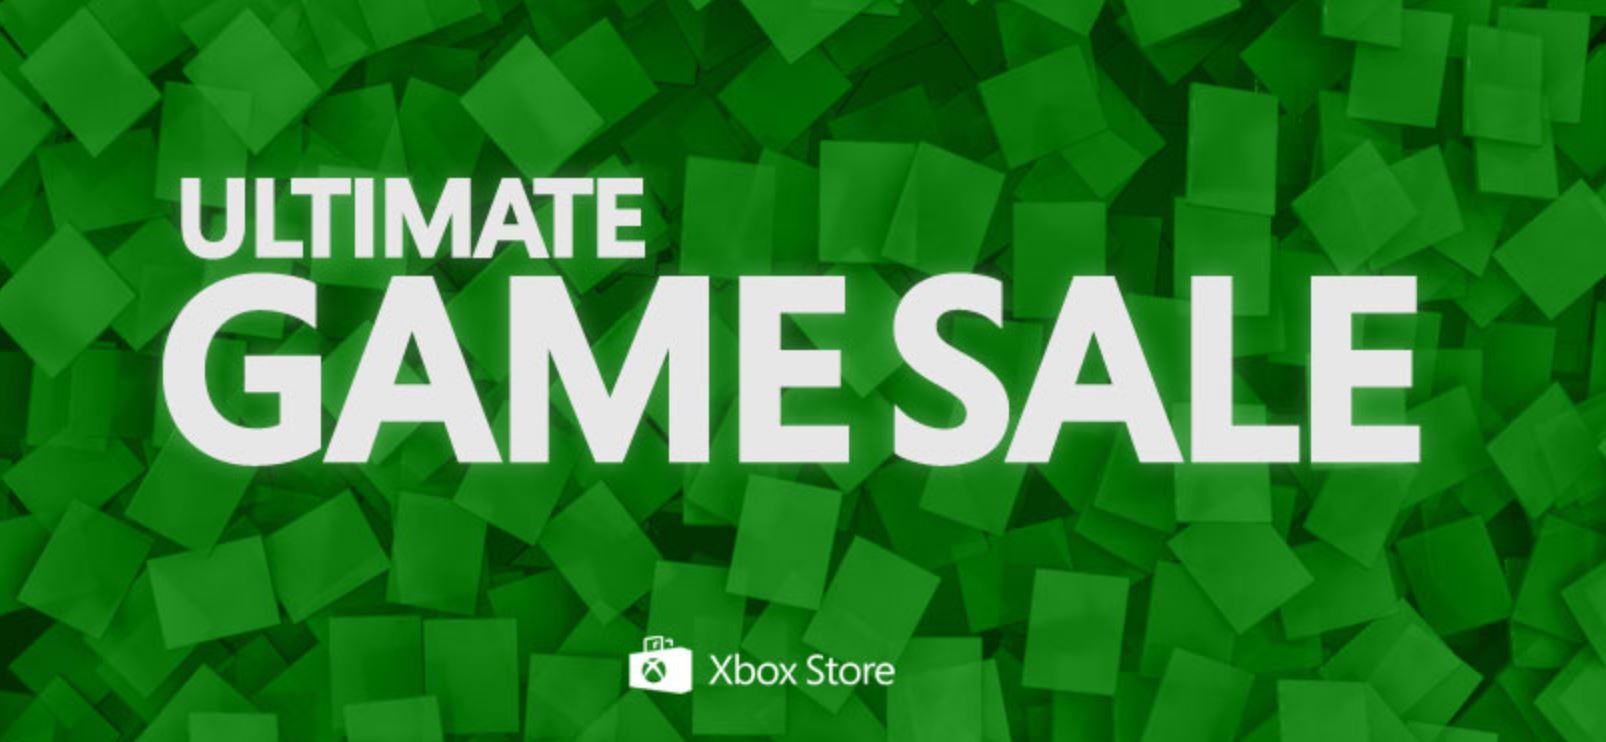 Dette er titlene i Microsofts Xbox Annual Ultimate Game Sale